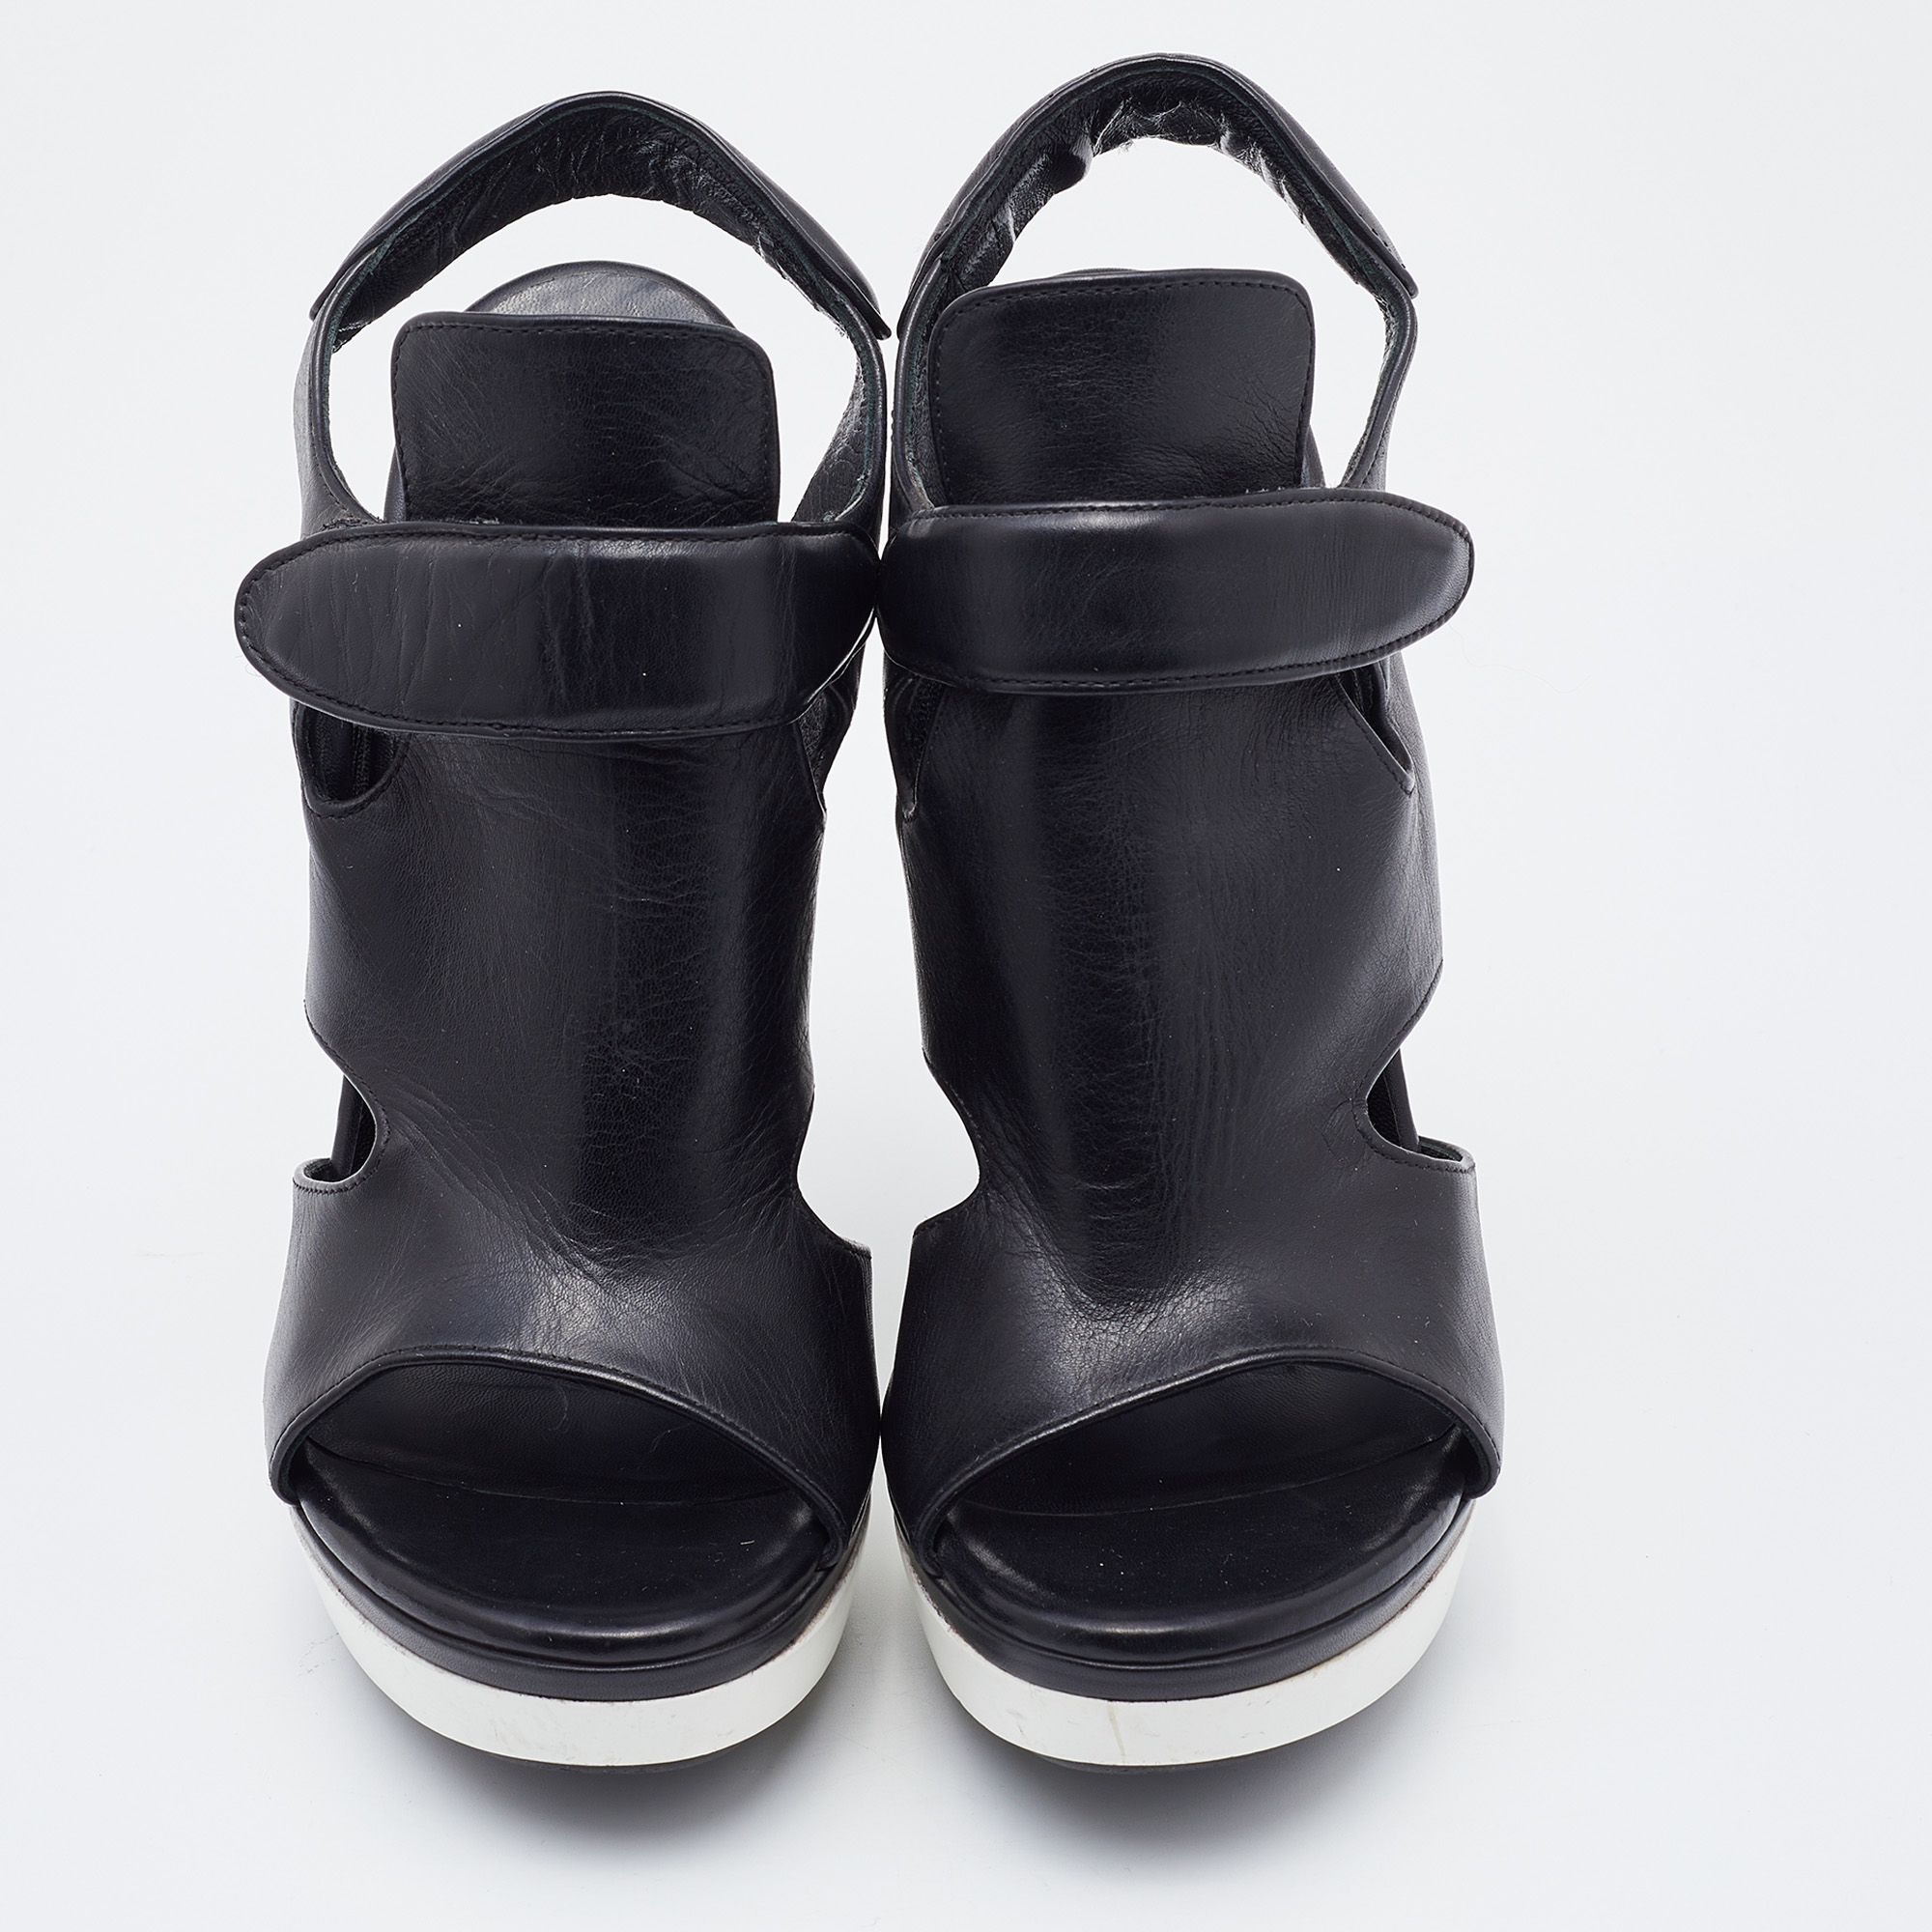 Balenciaga Black Leather Slingback Sandals Size 38.5